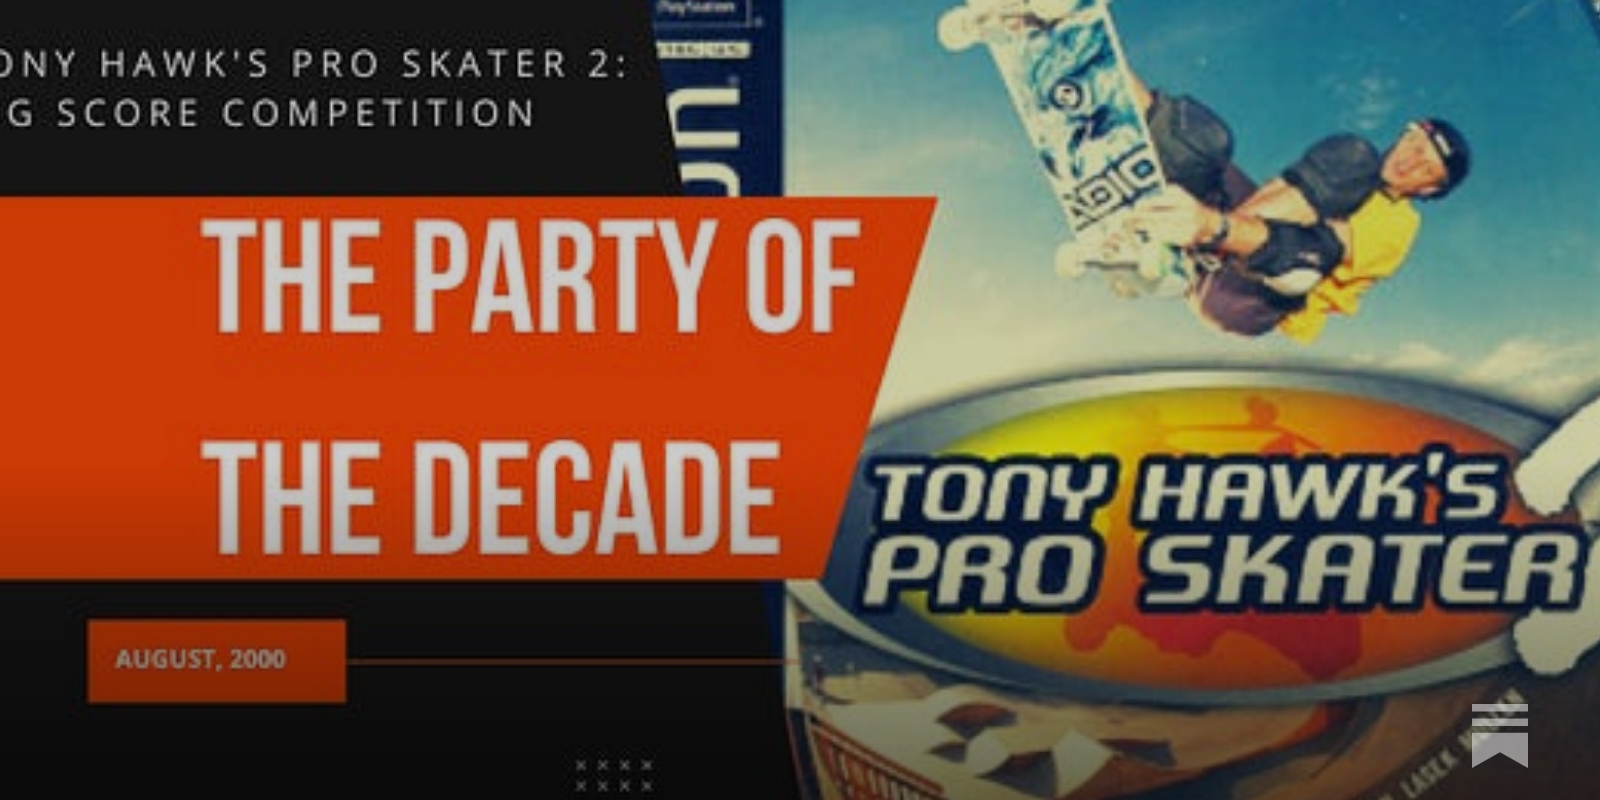 Tony Hawk's Pro Skater 2 Print Ad/Poster Art Playstation Dreamcast PC (A)